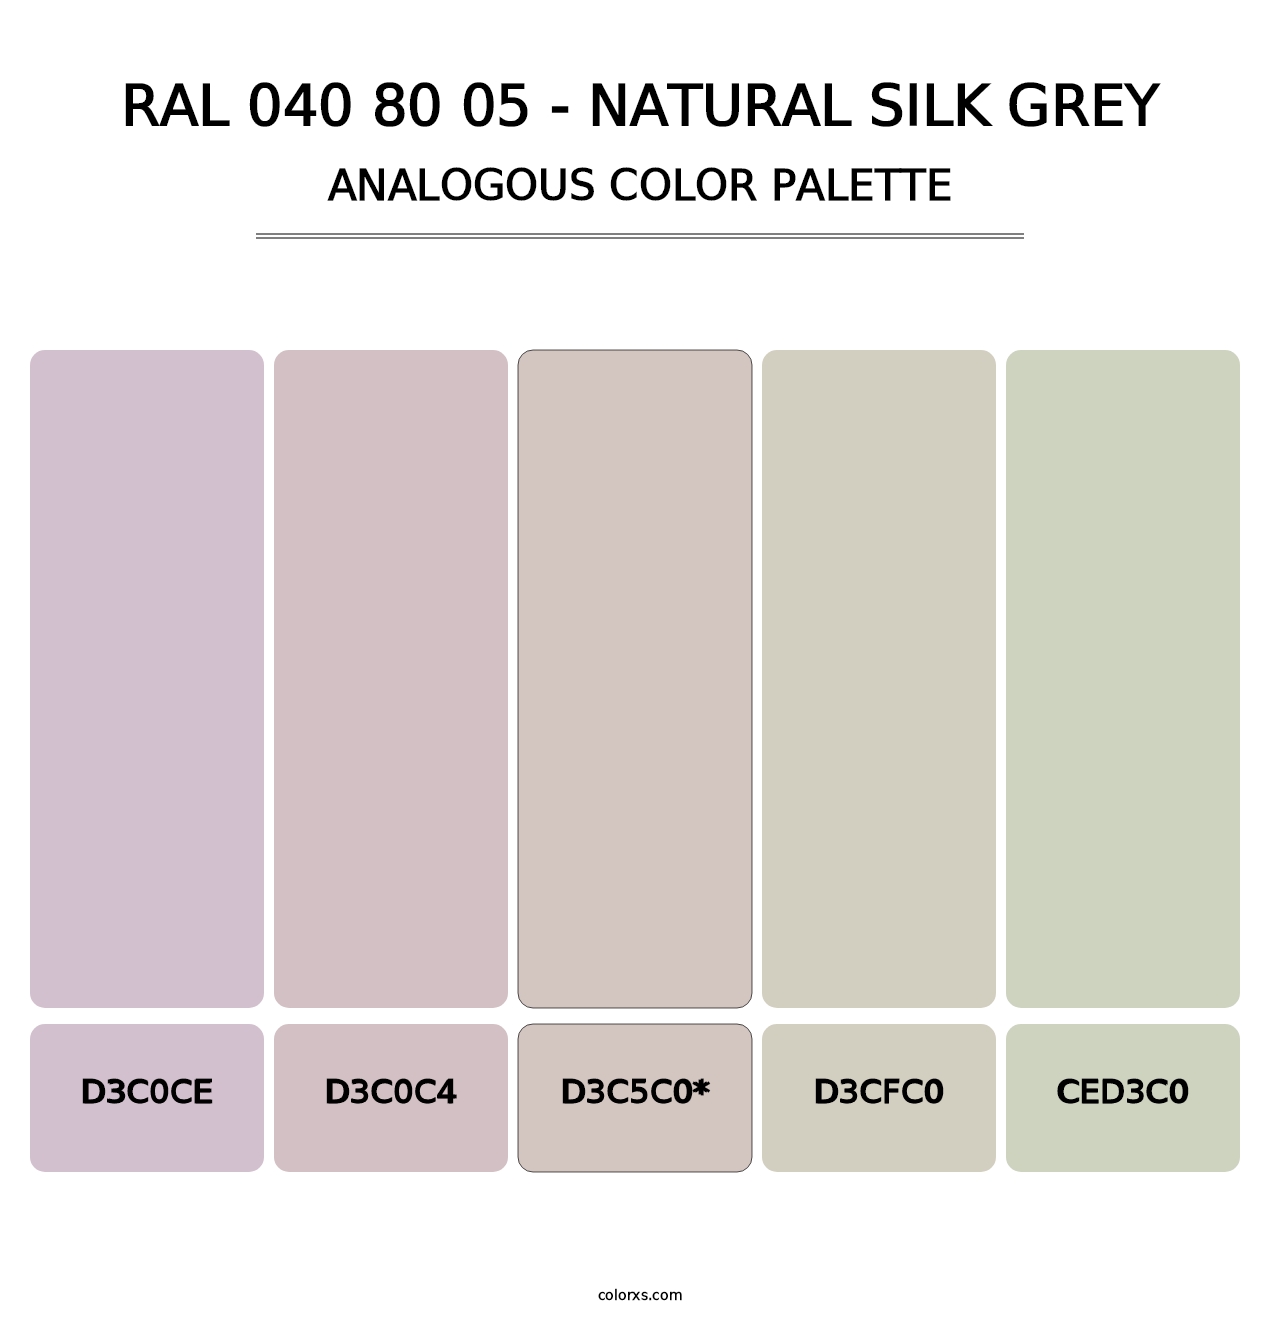 RAL 040 80 05 - Natural Silk Grey - Analogous Color Palette